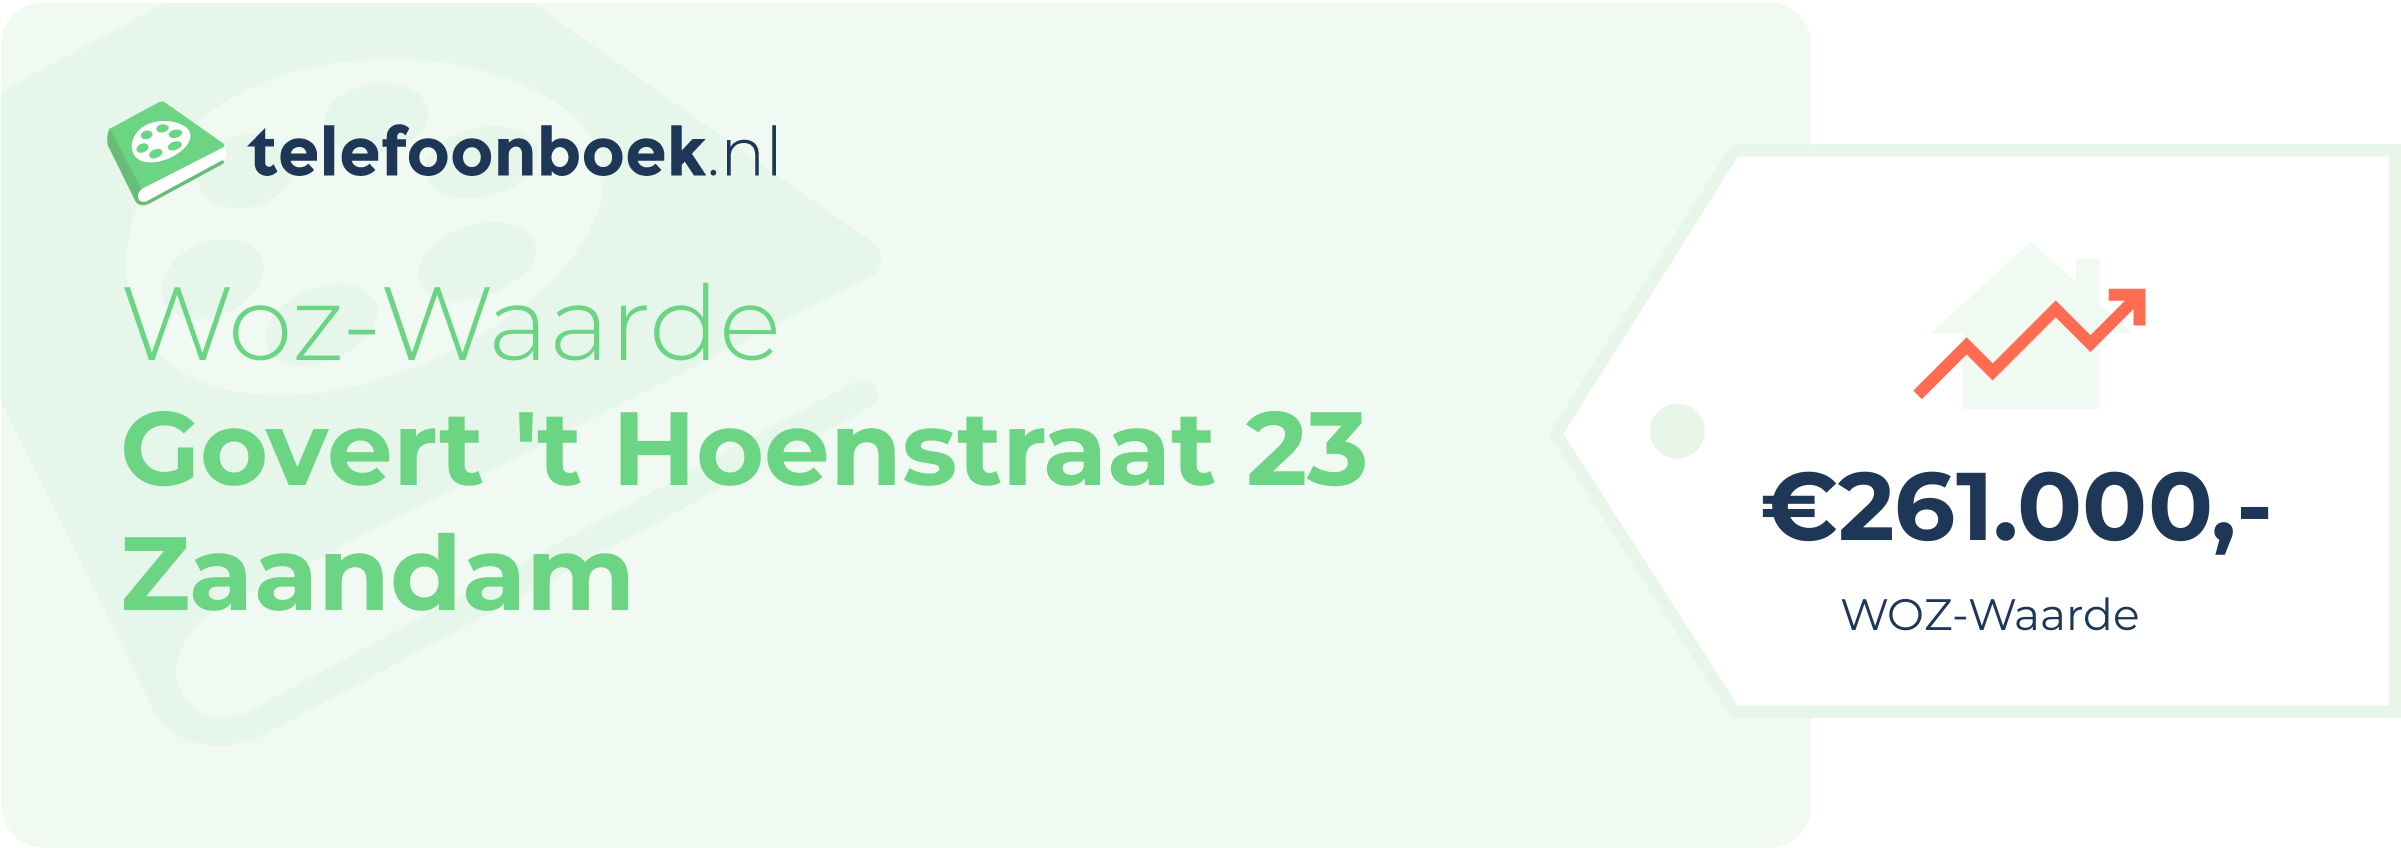 WOZ-waarde Govert 't Hoenstraat 23 Zaandam